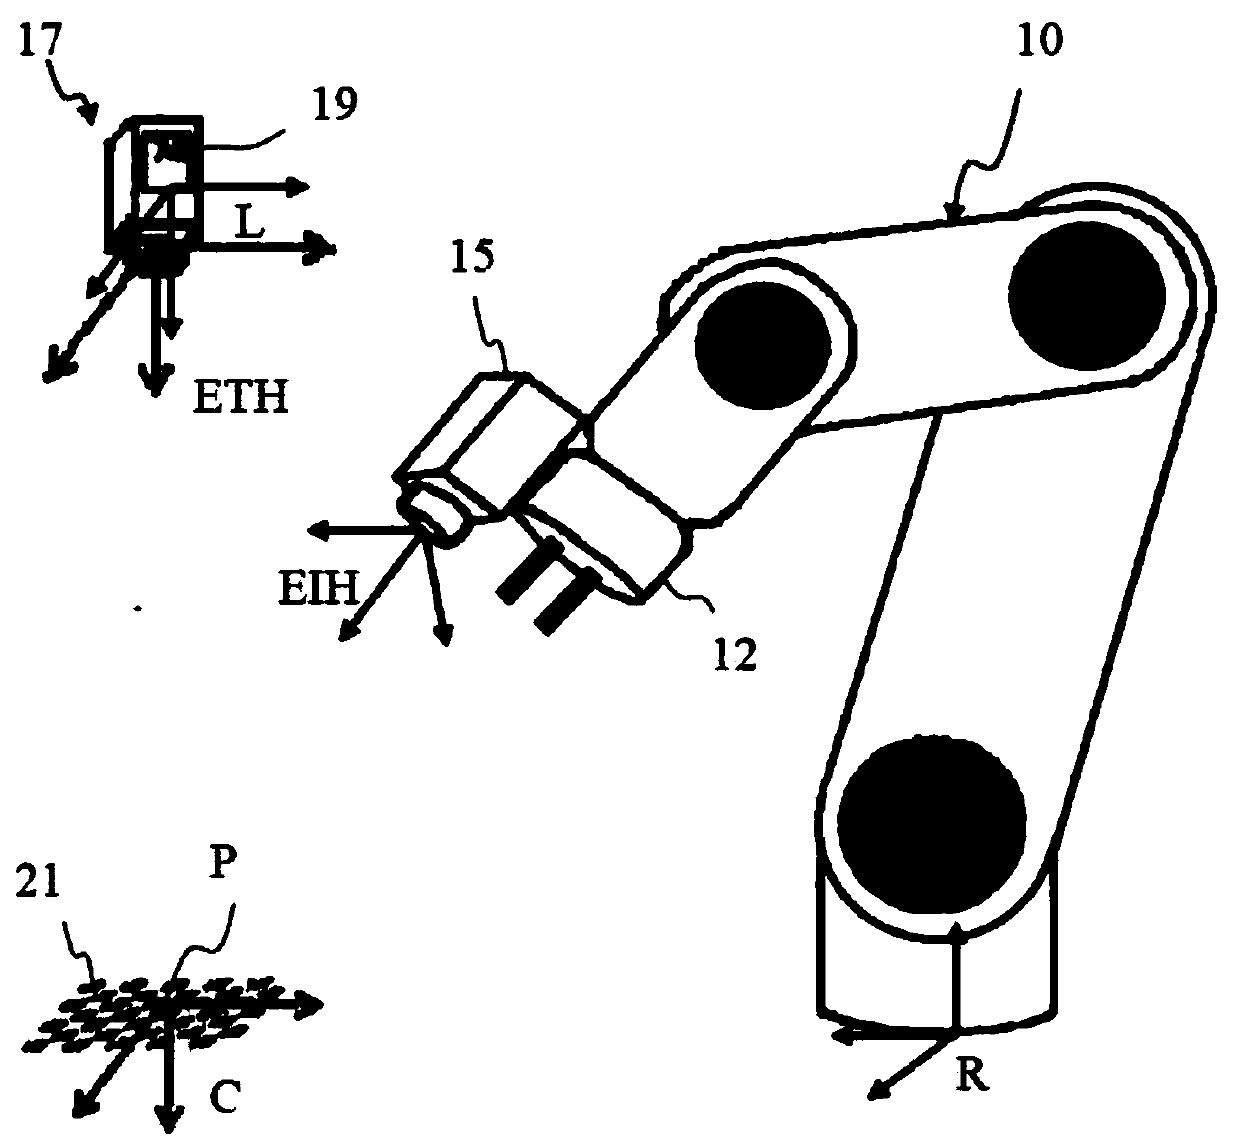 Method for correcting eye-to-hand through robot arm